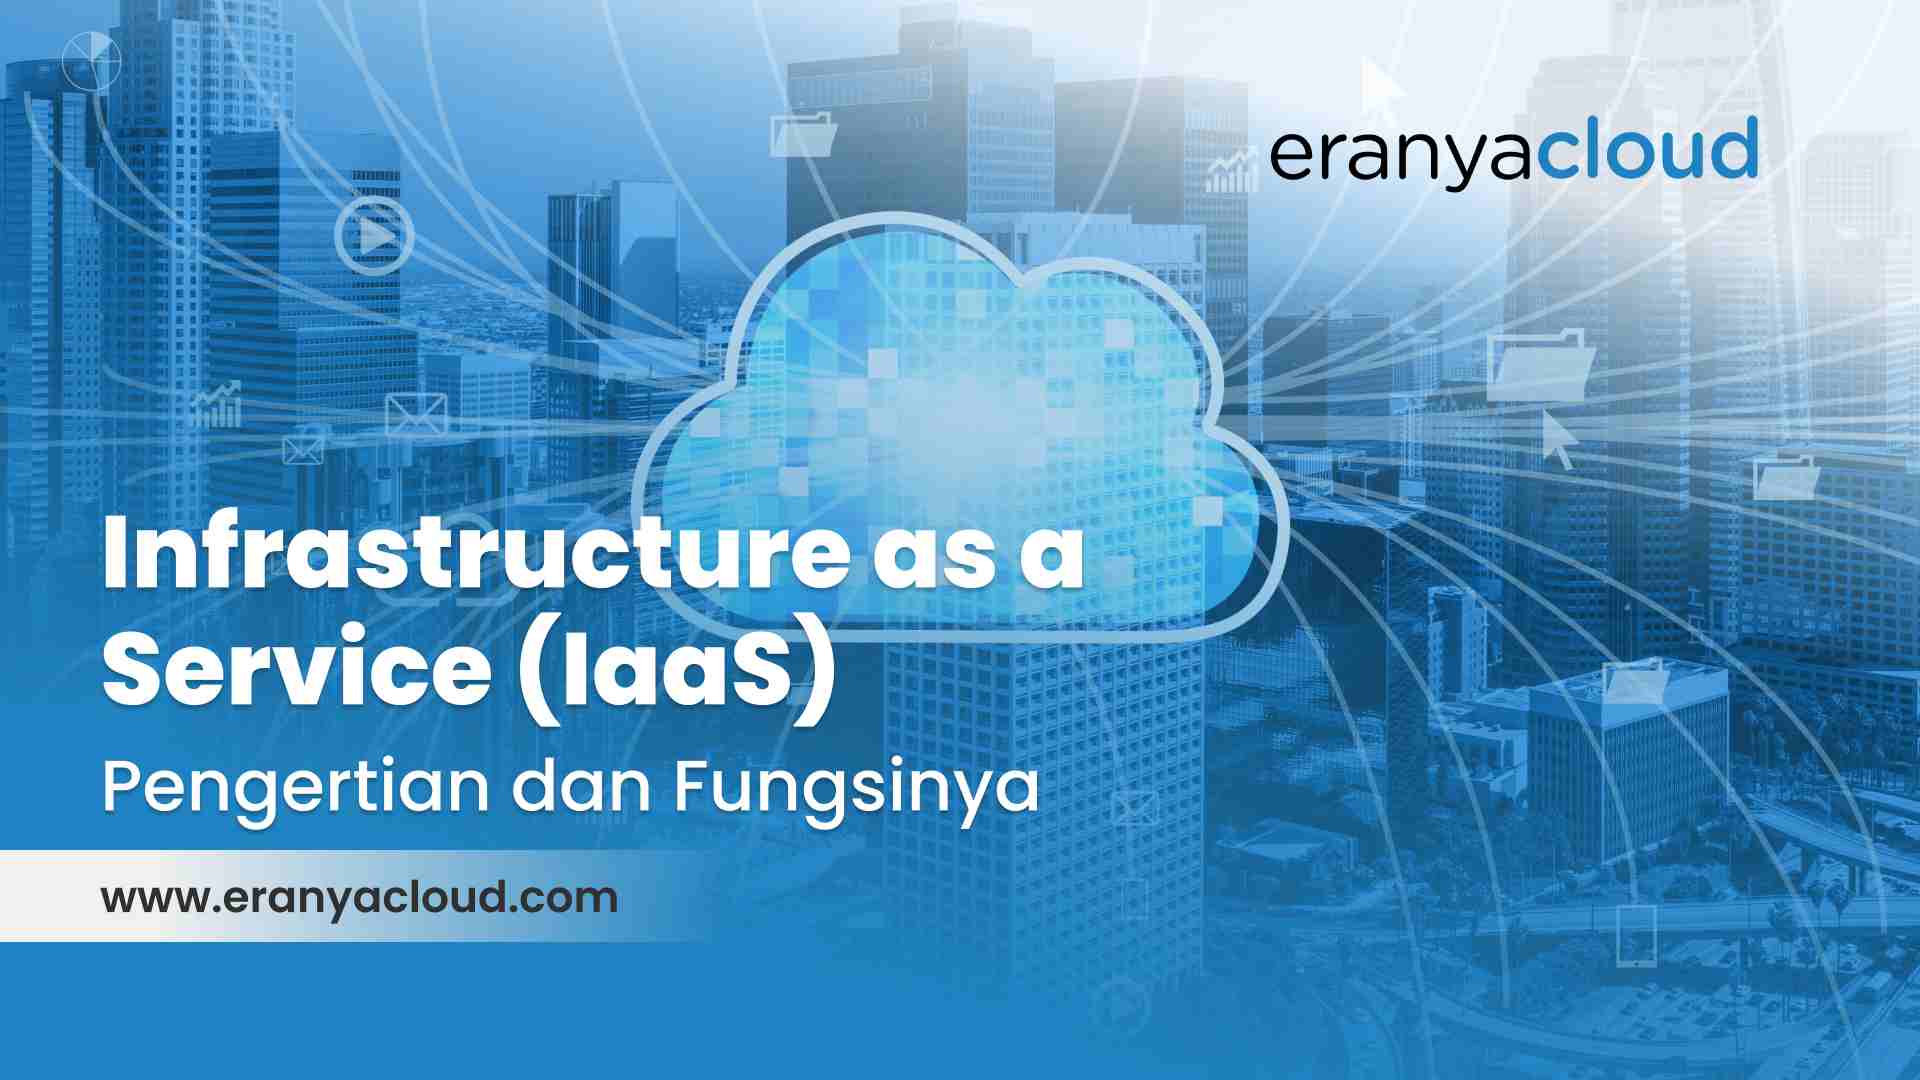 EC - Infrastructure as a Service (IaaS)_ Pengertian dan Fungsinya_11zon